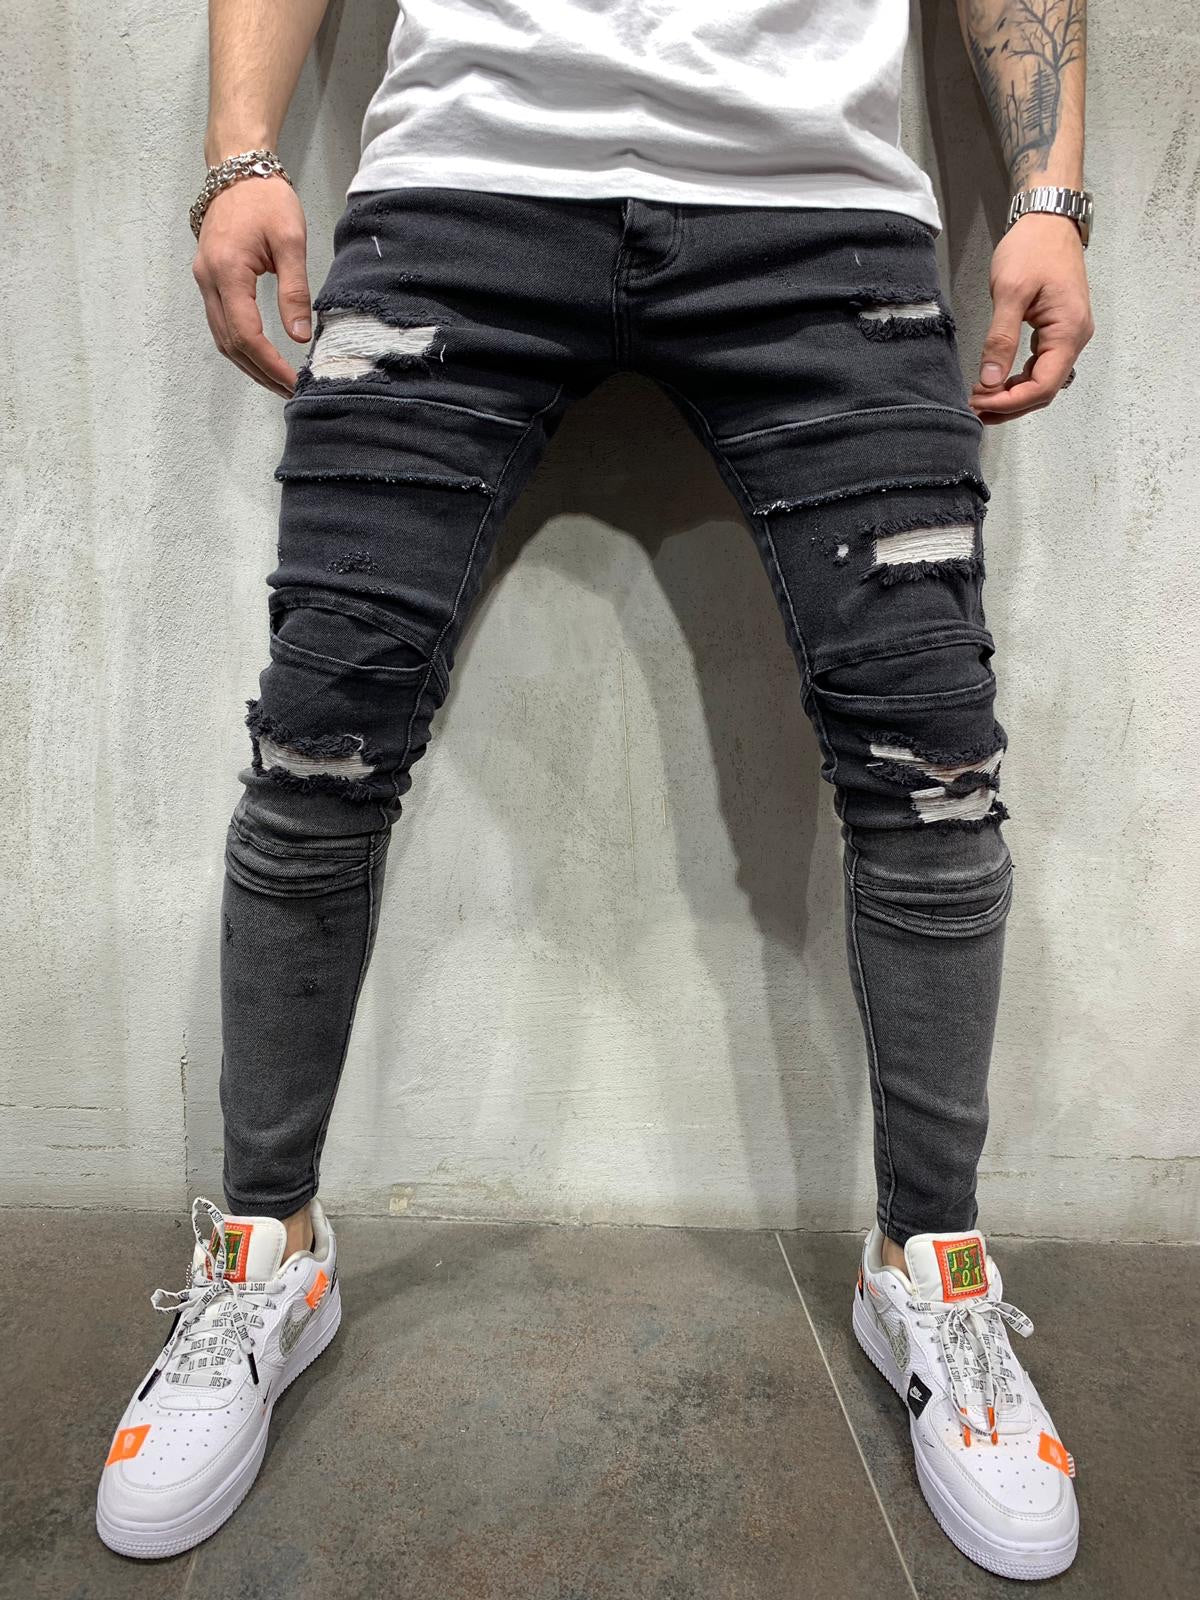 ripped black jeans slim fit